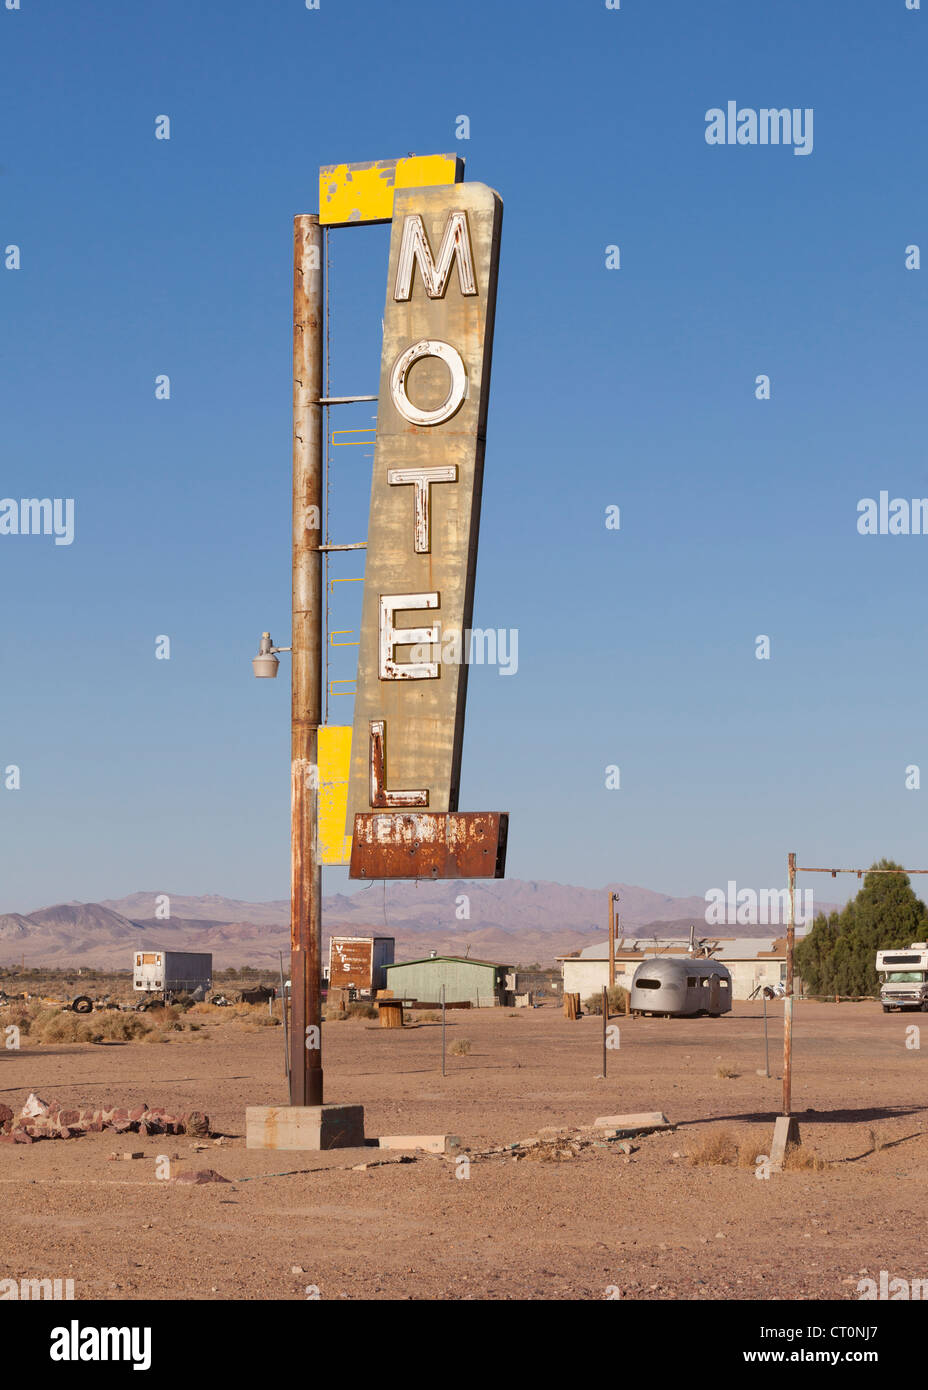 Vieux motel sign - Arizona USA Banque D'Images